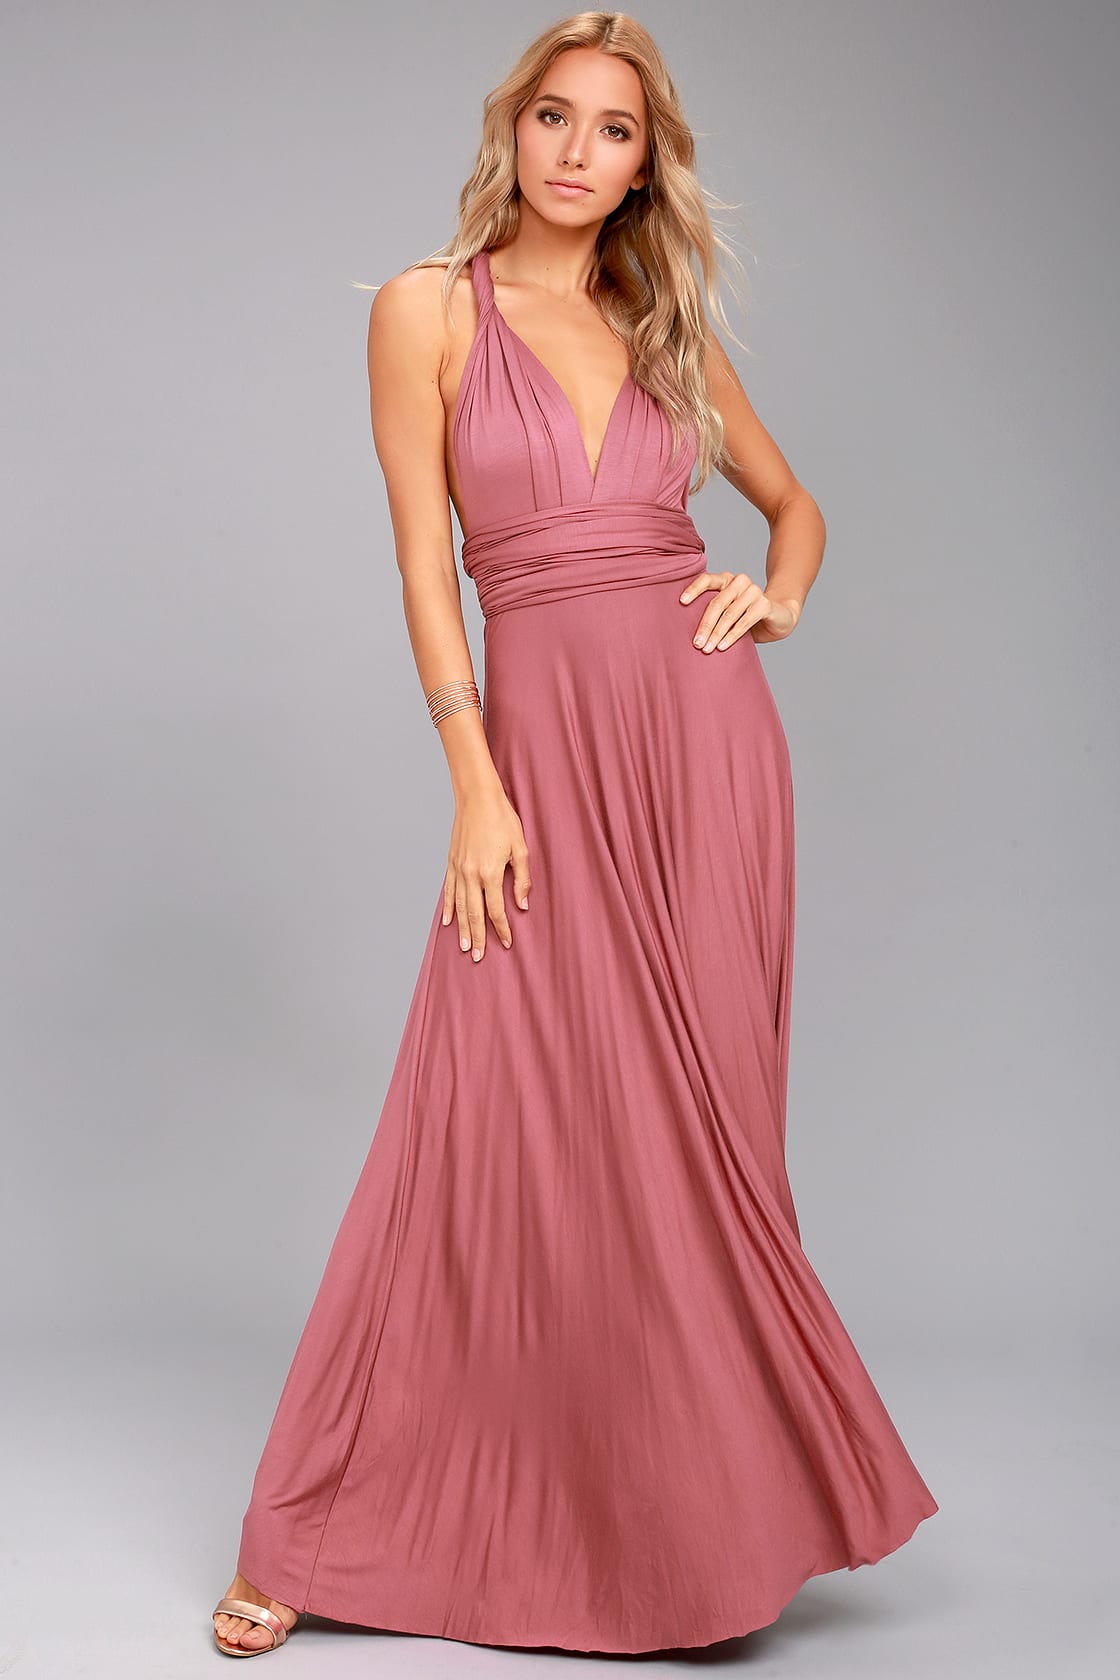 Cheap Pink Bridesmaid Dress Under $100